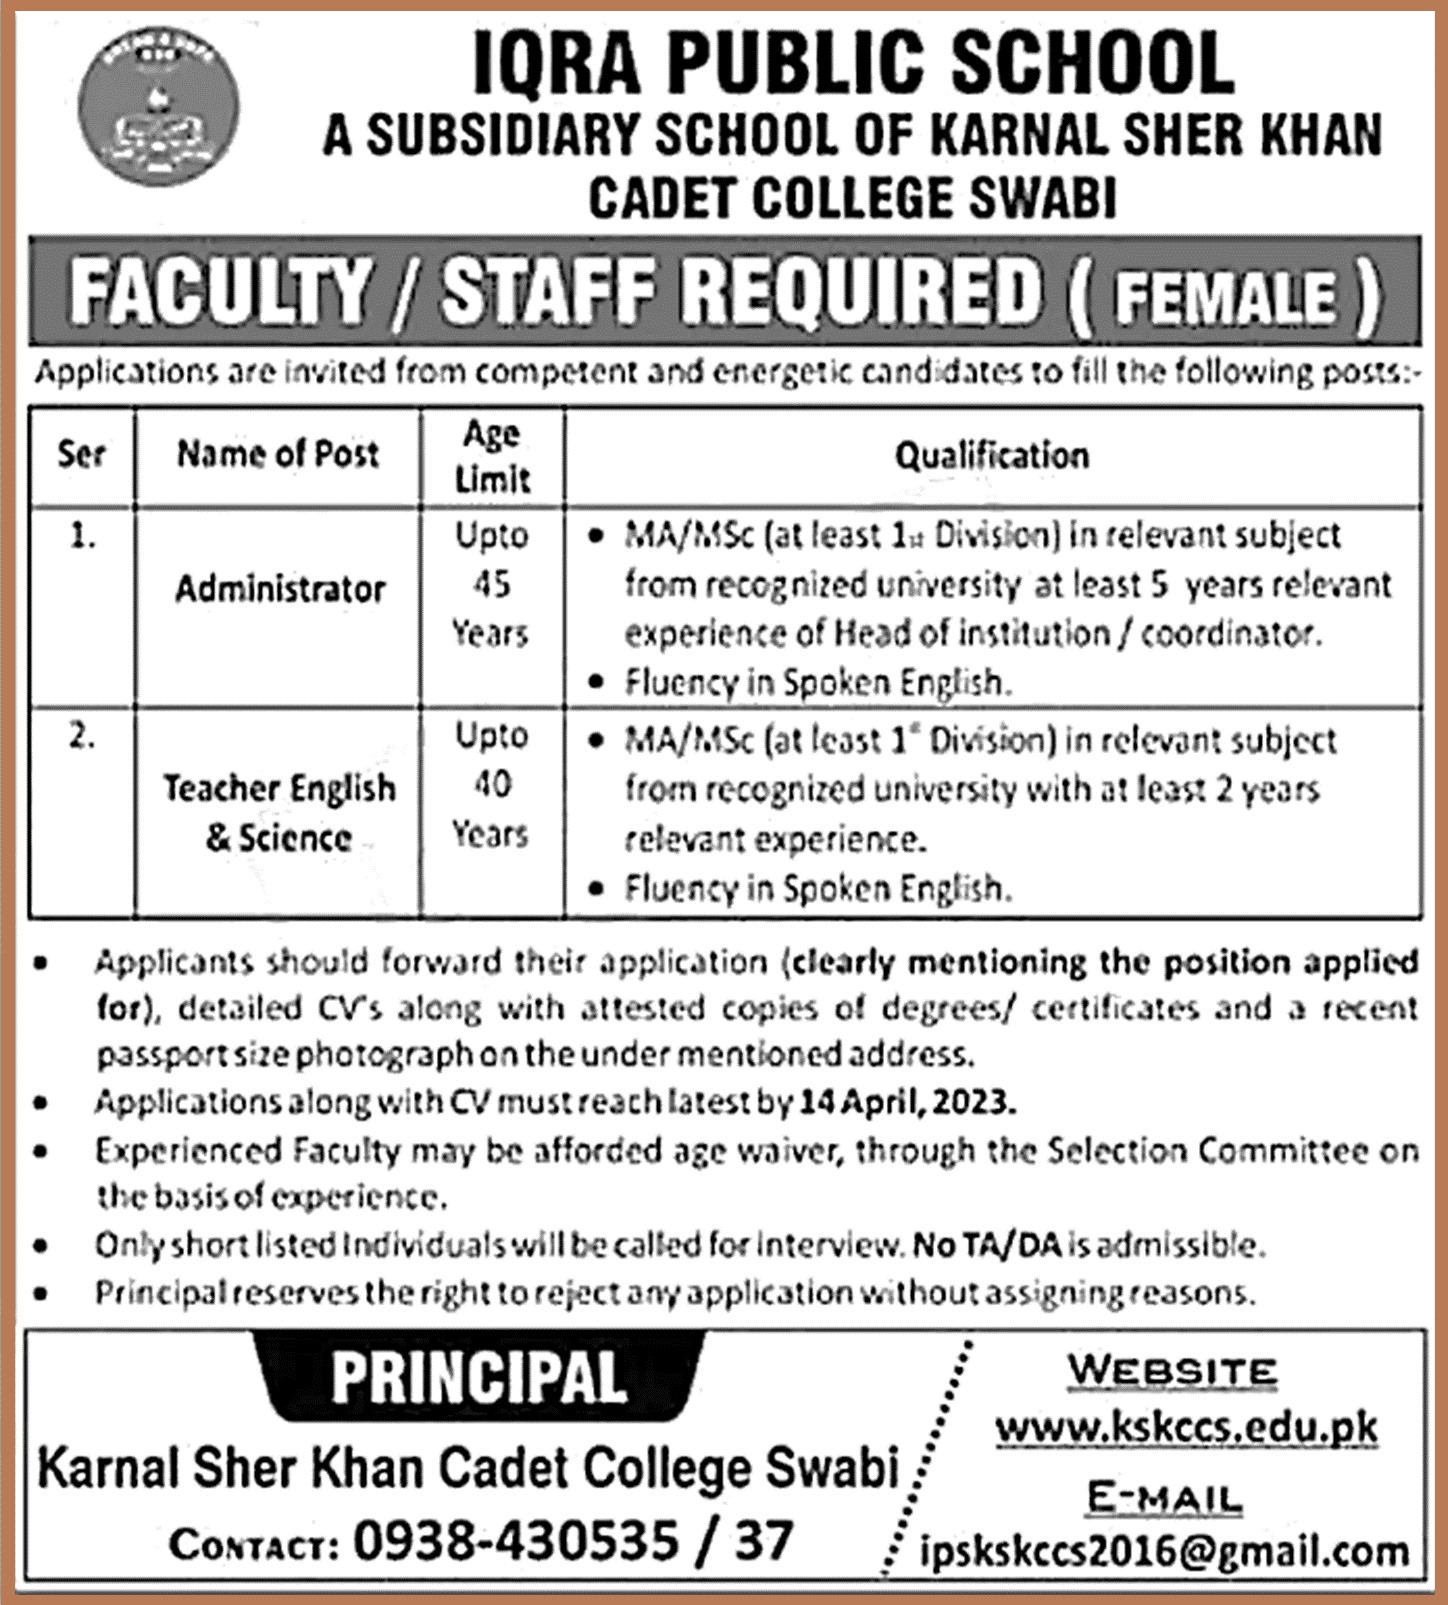 Karnal Sher Khan Cadet College Swabi 2023 Jobs at Iqra Public School